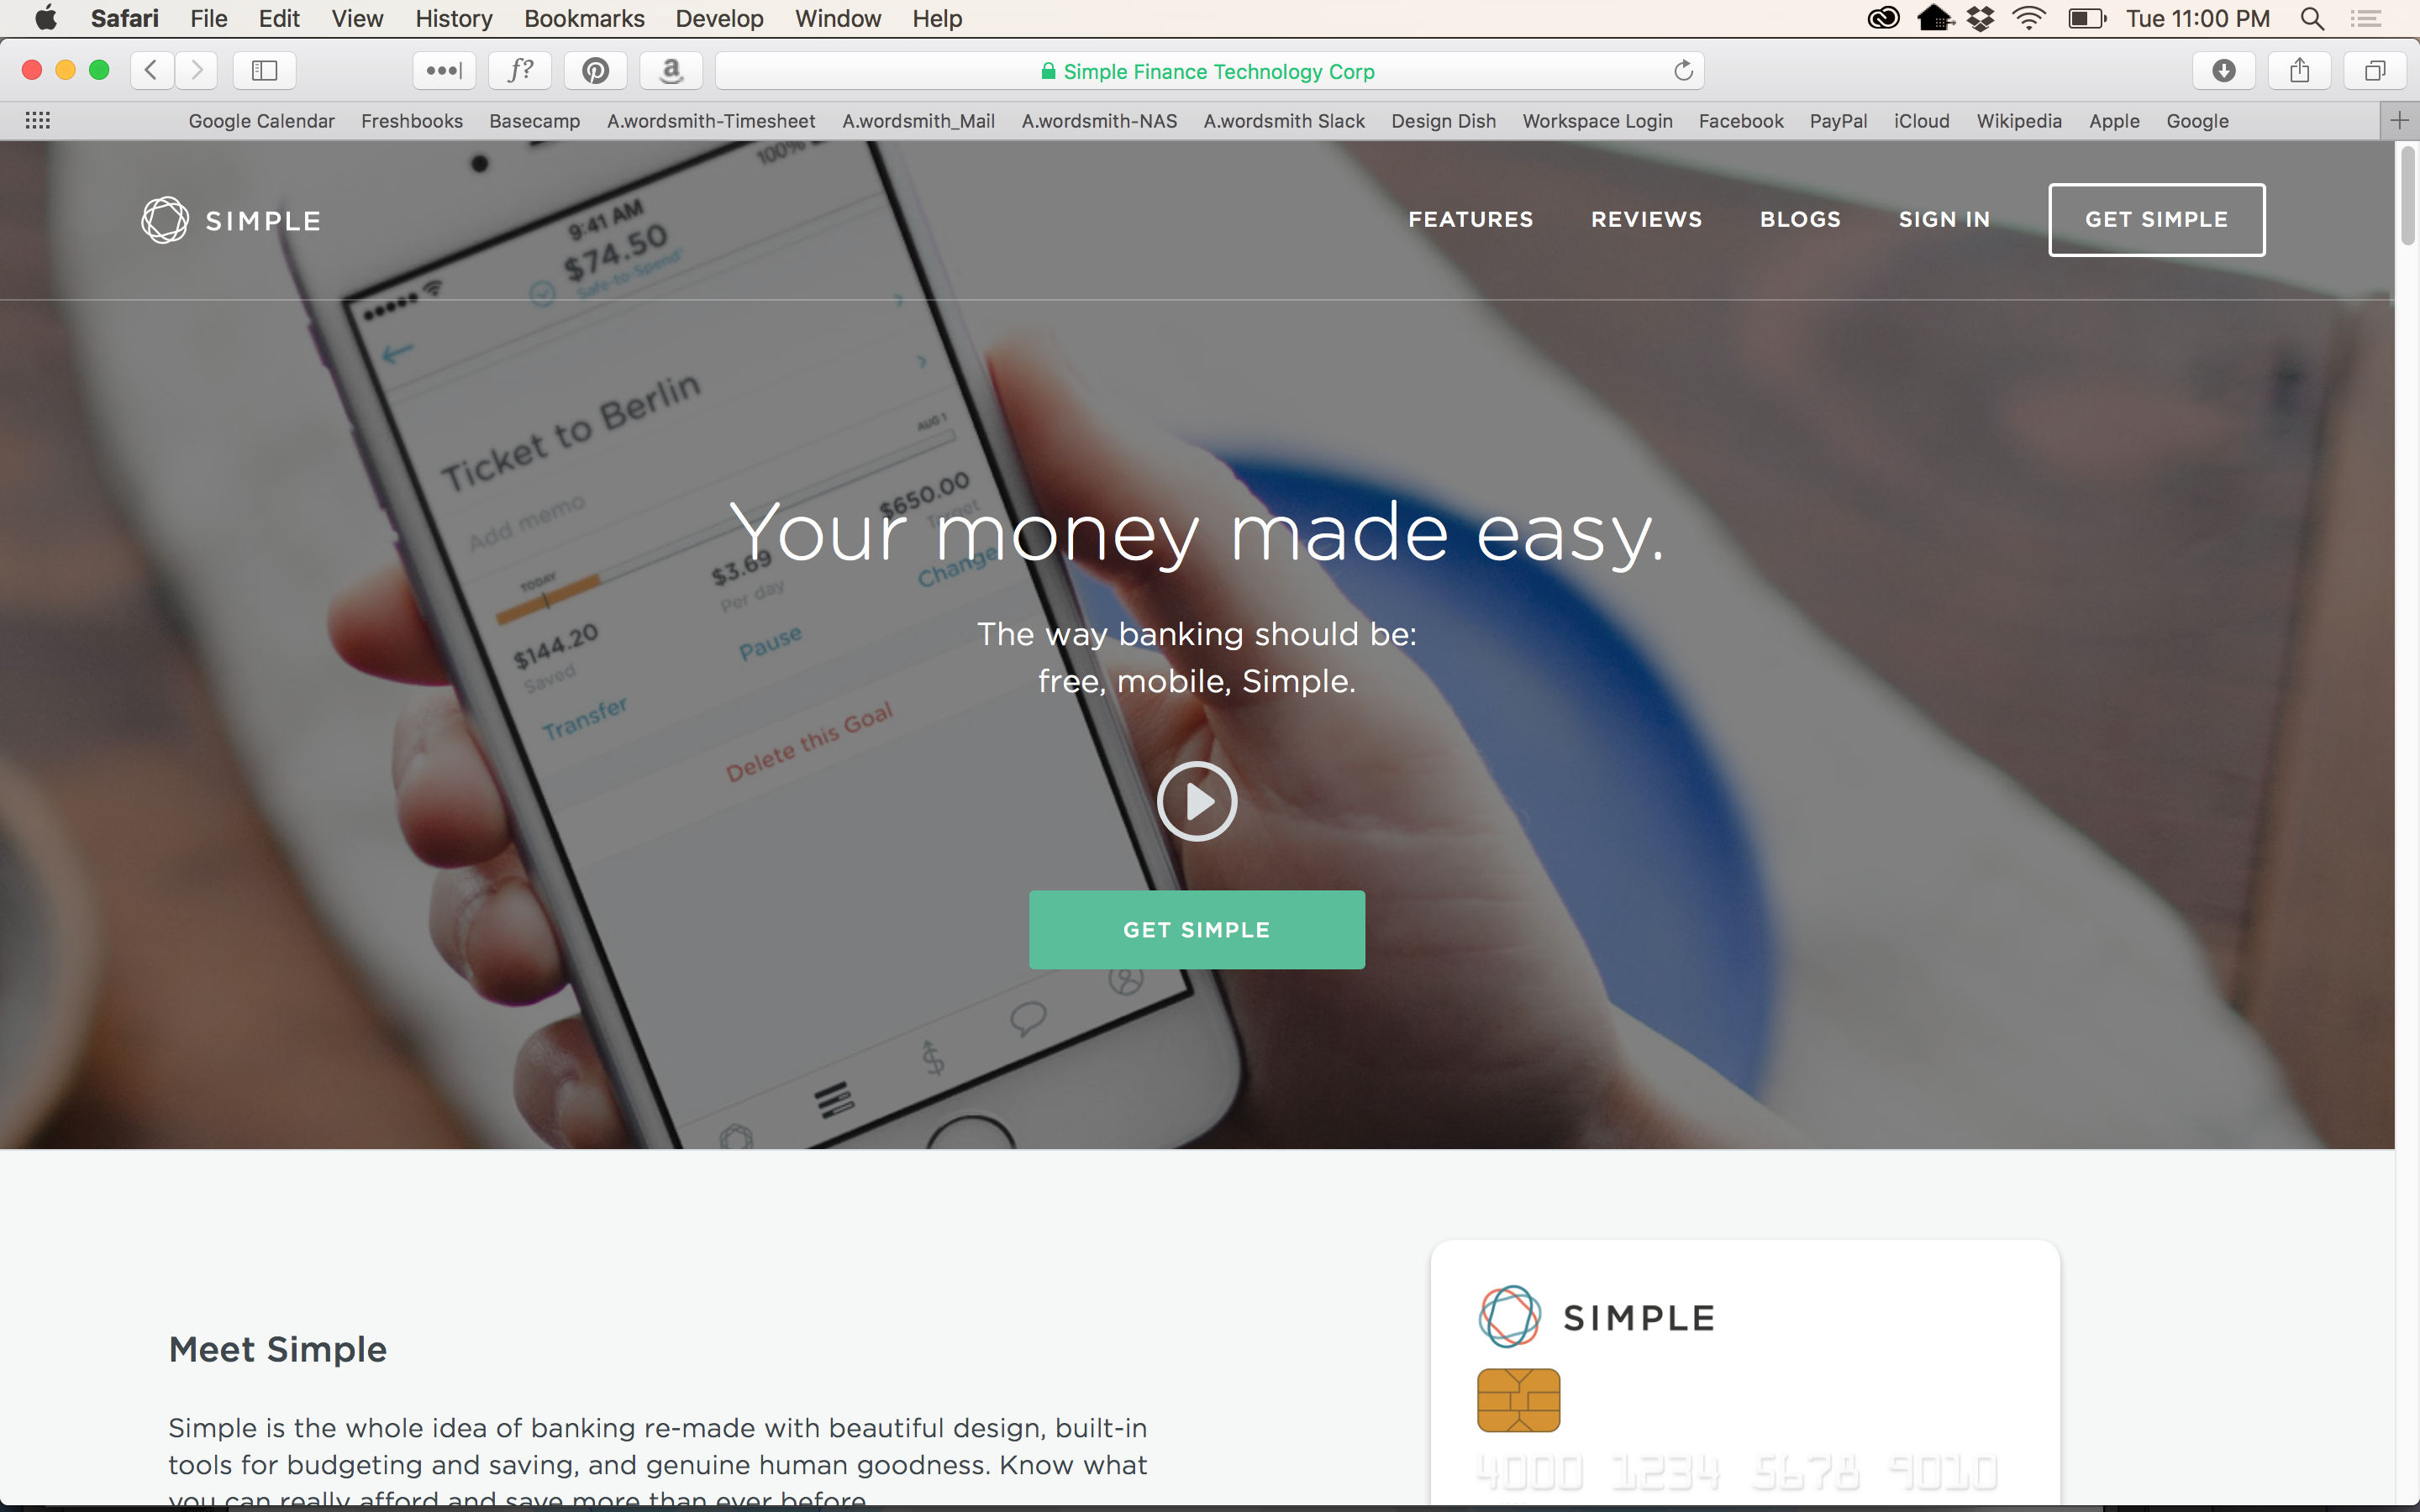 Simple bank's homepage